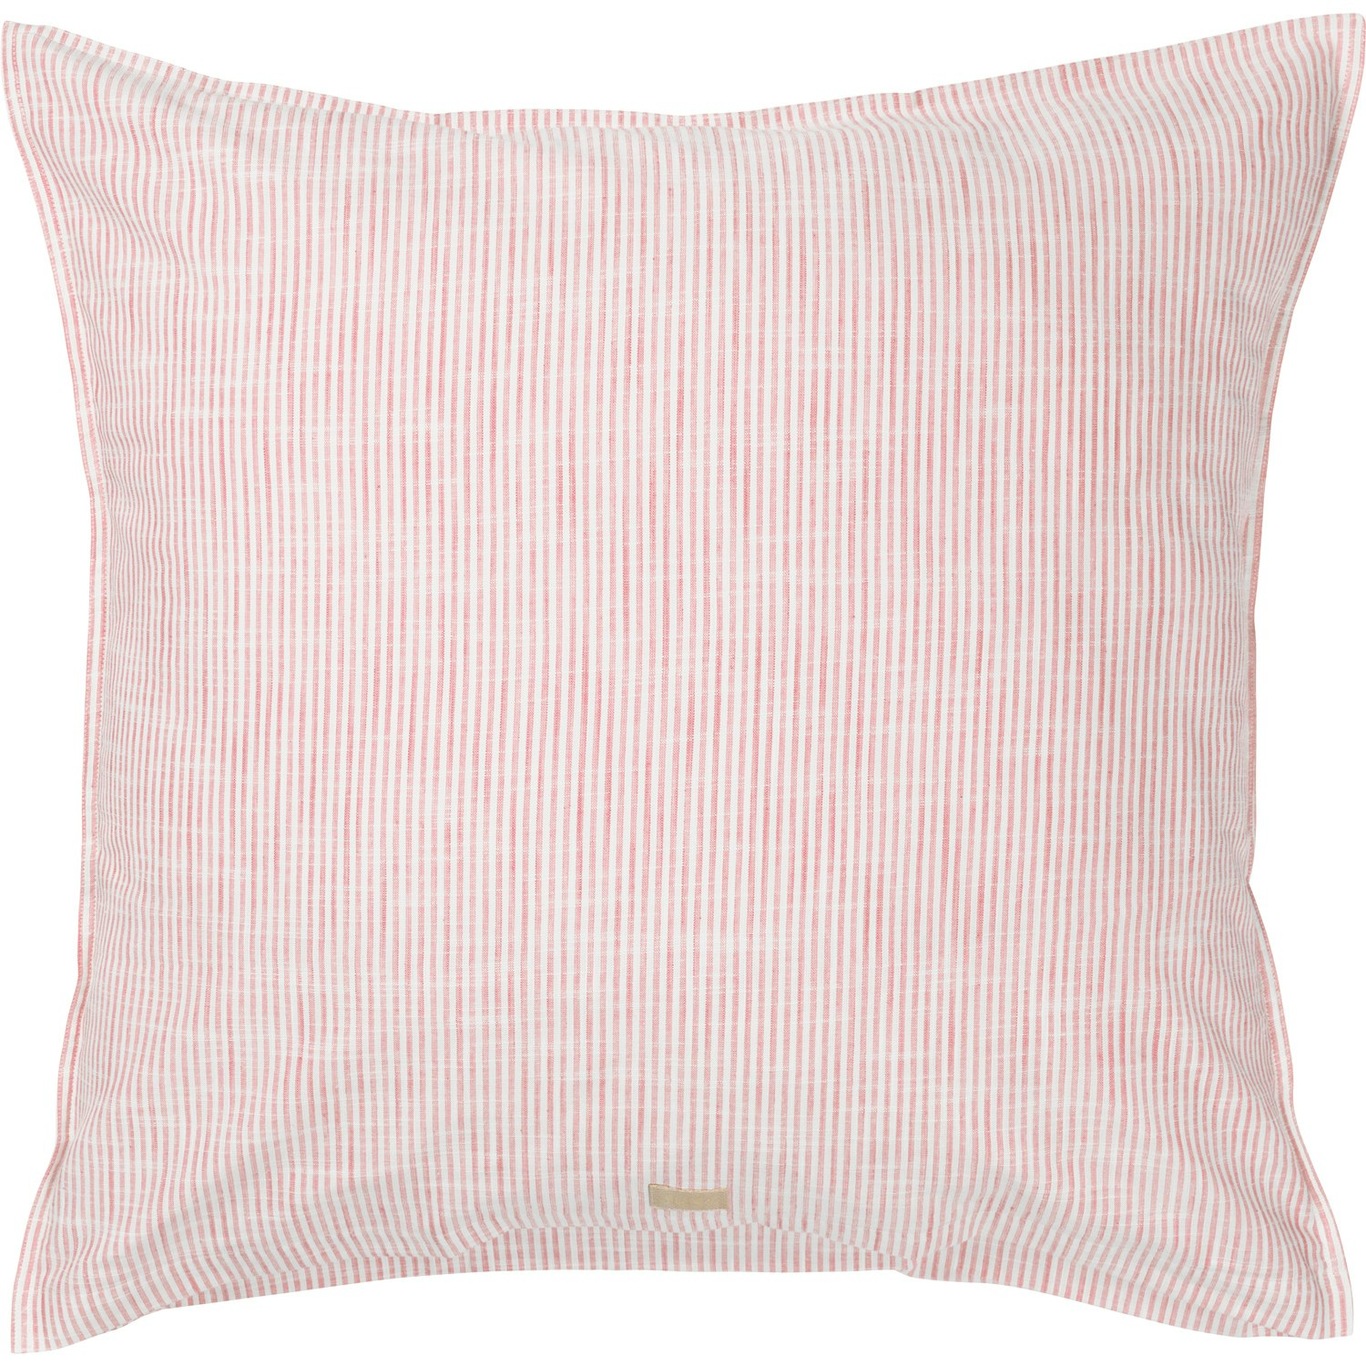 Monochrome Lines Pillowcase 50x60 cm, Pink